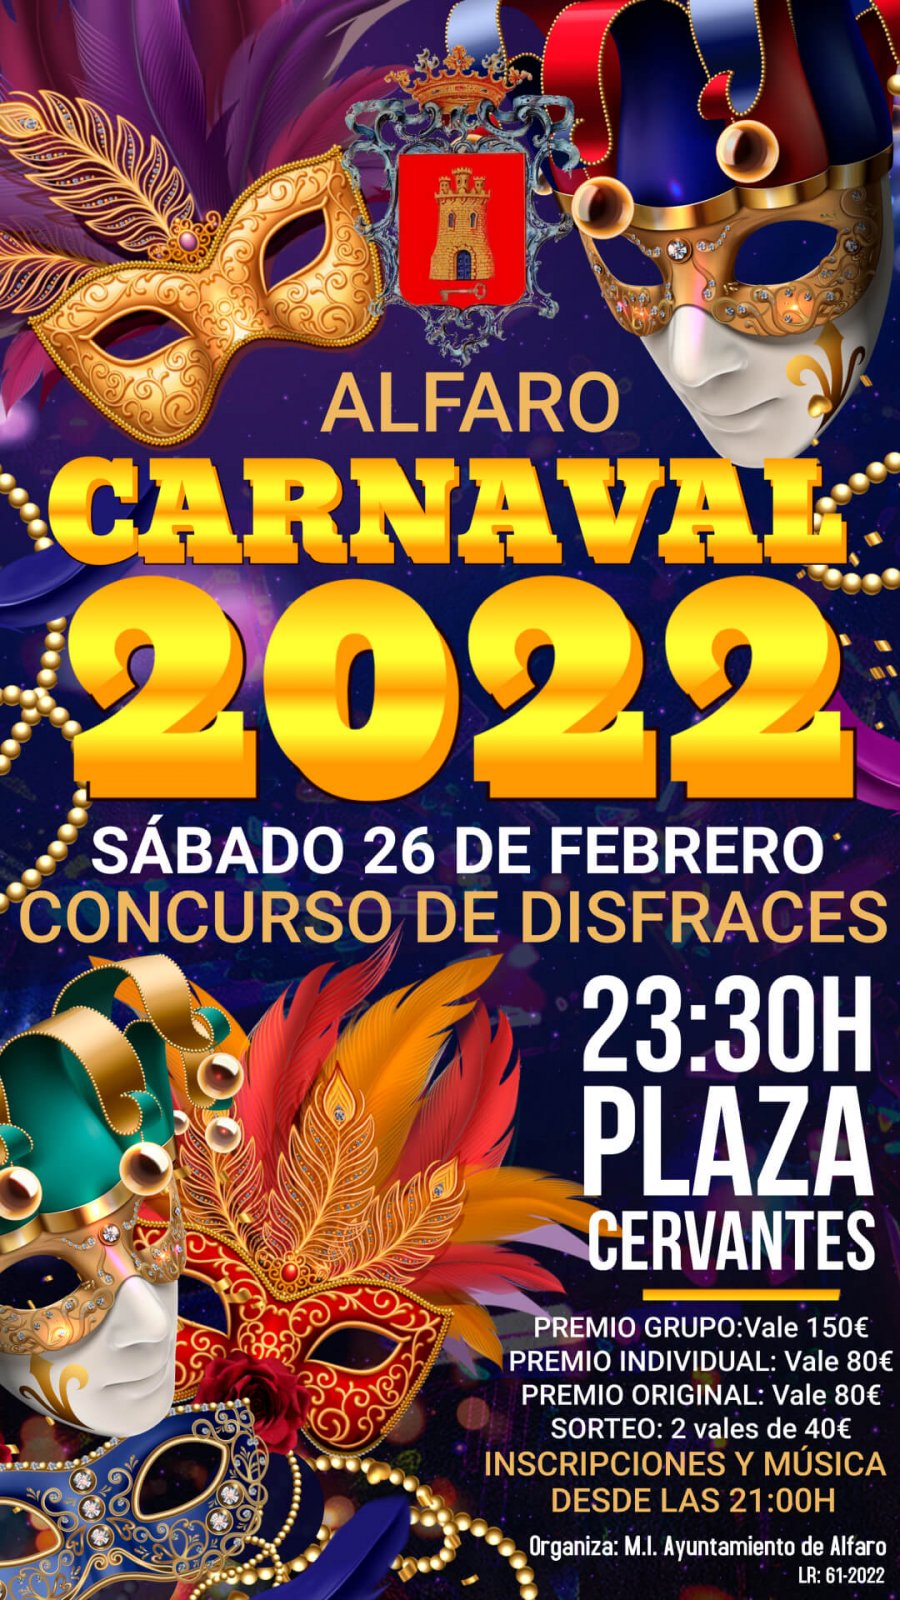 ALFARO cartel concurso carnaval 2022